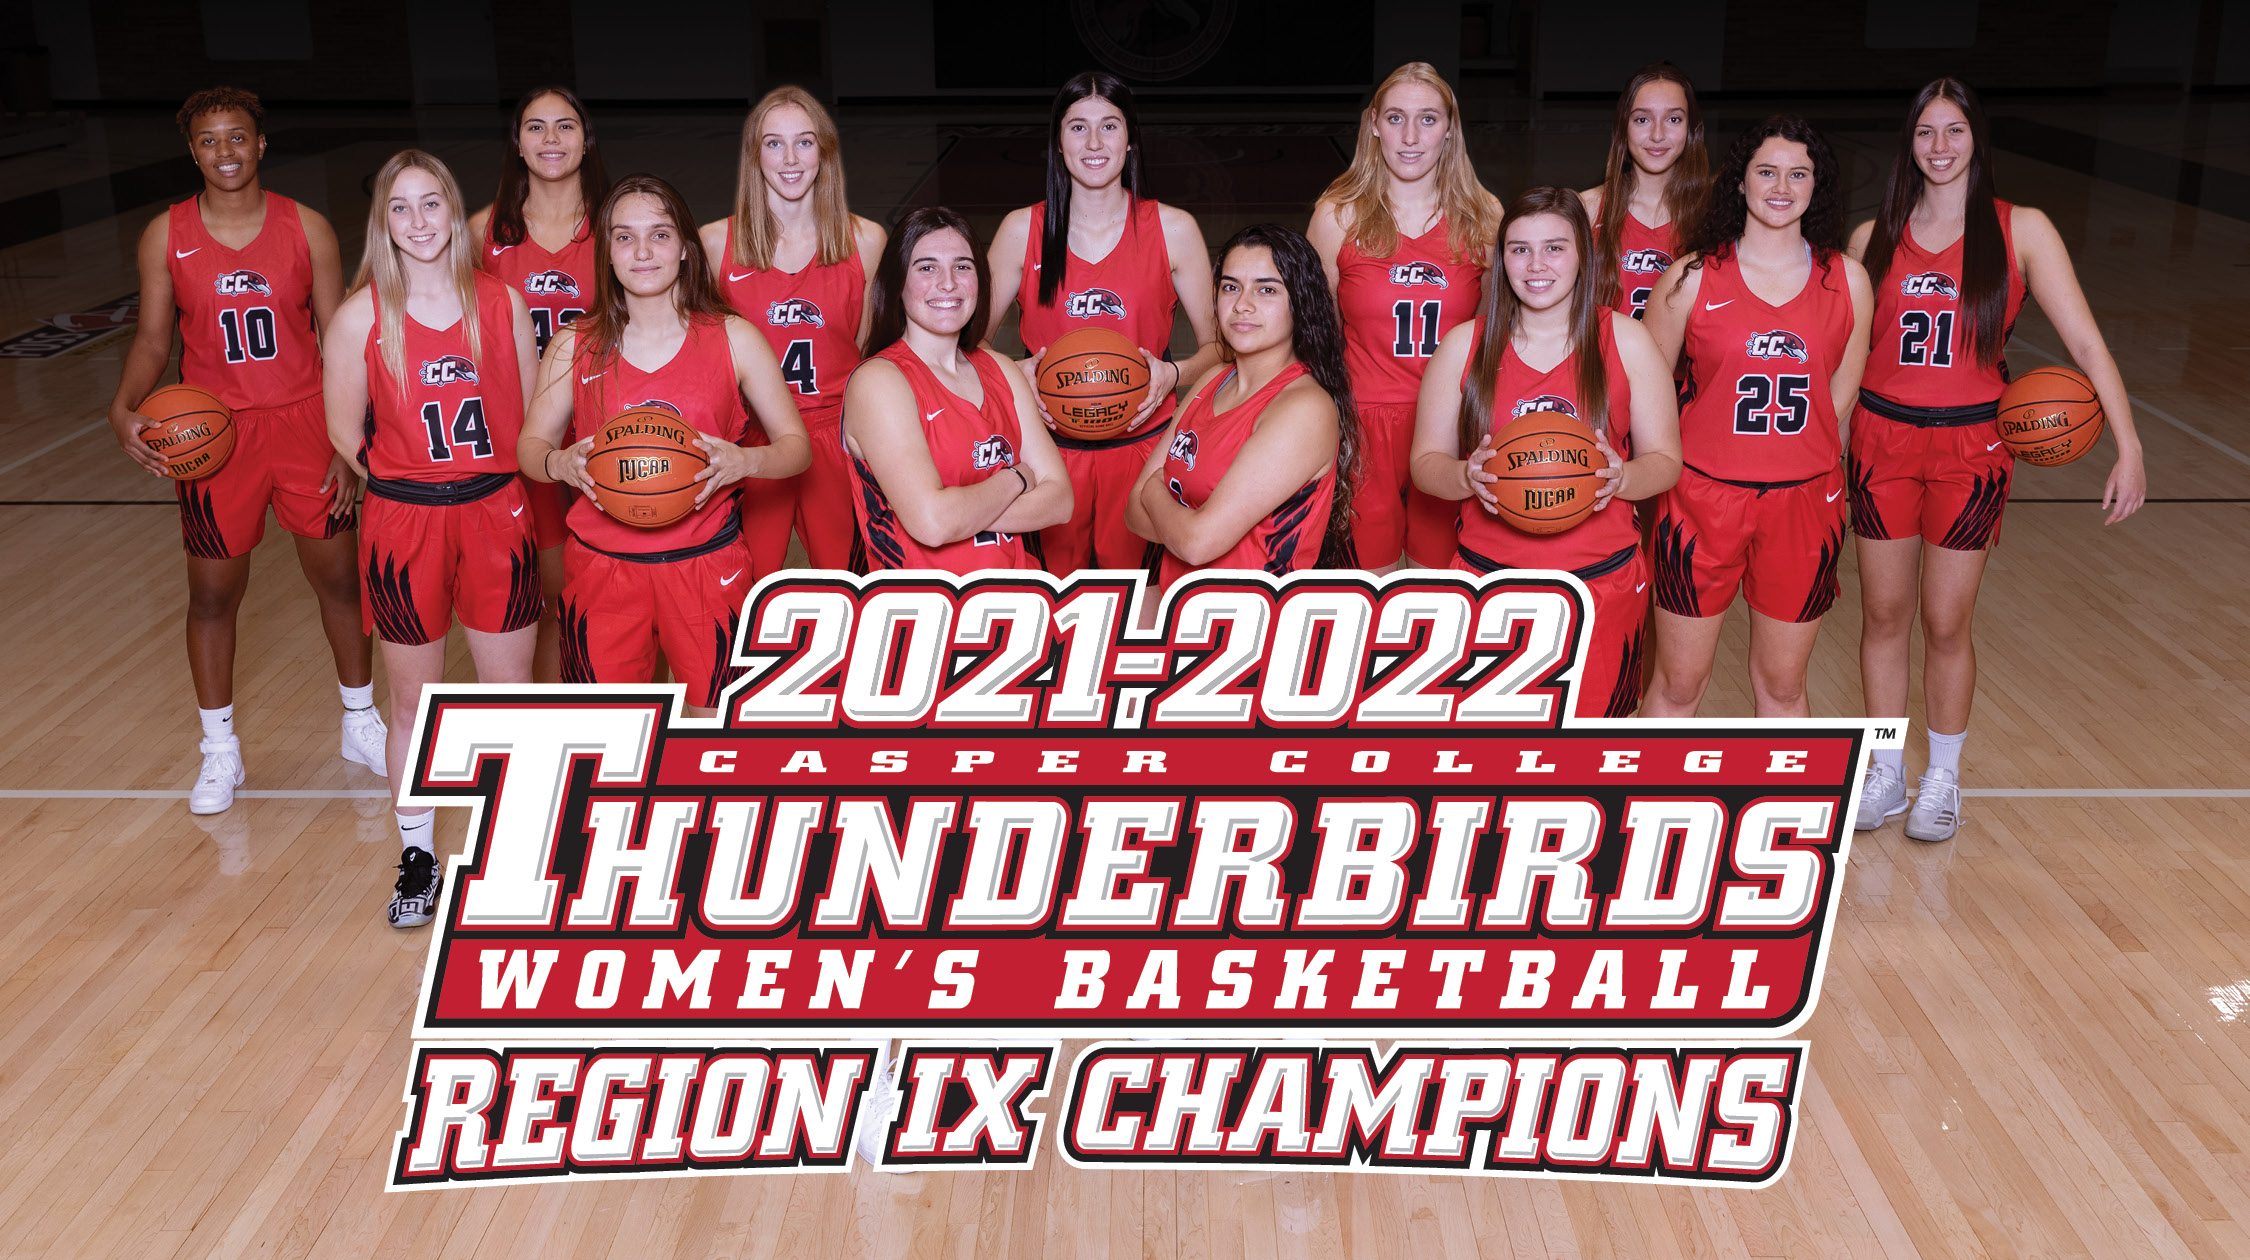 2021-2022 Region IX Women's Basketball Champions.